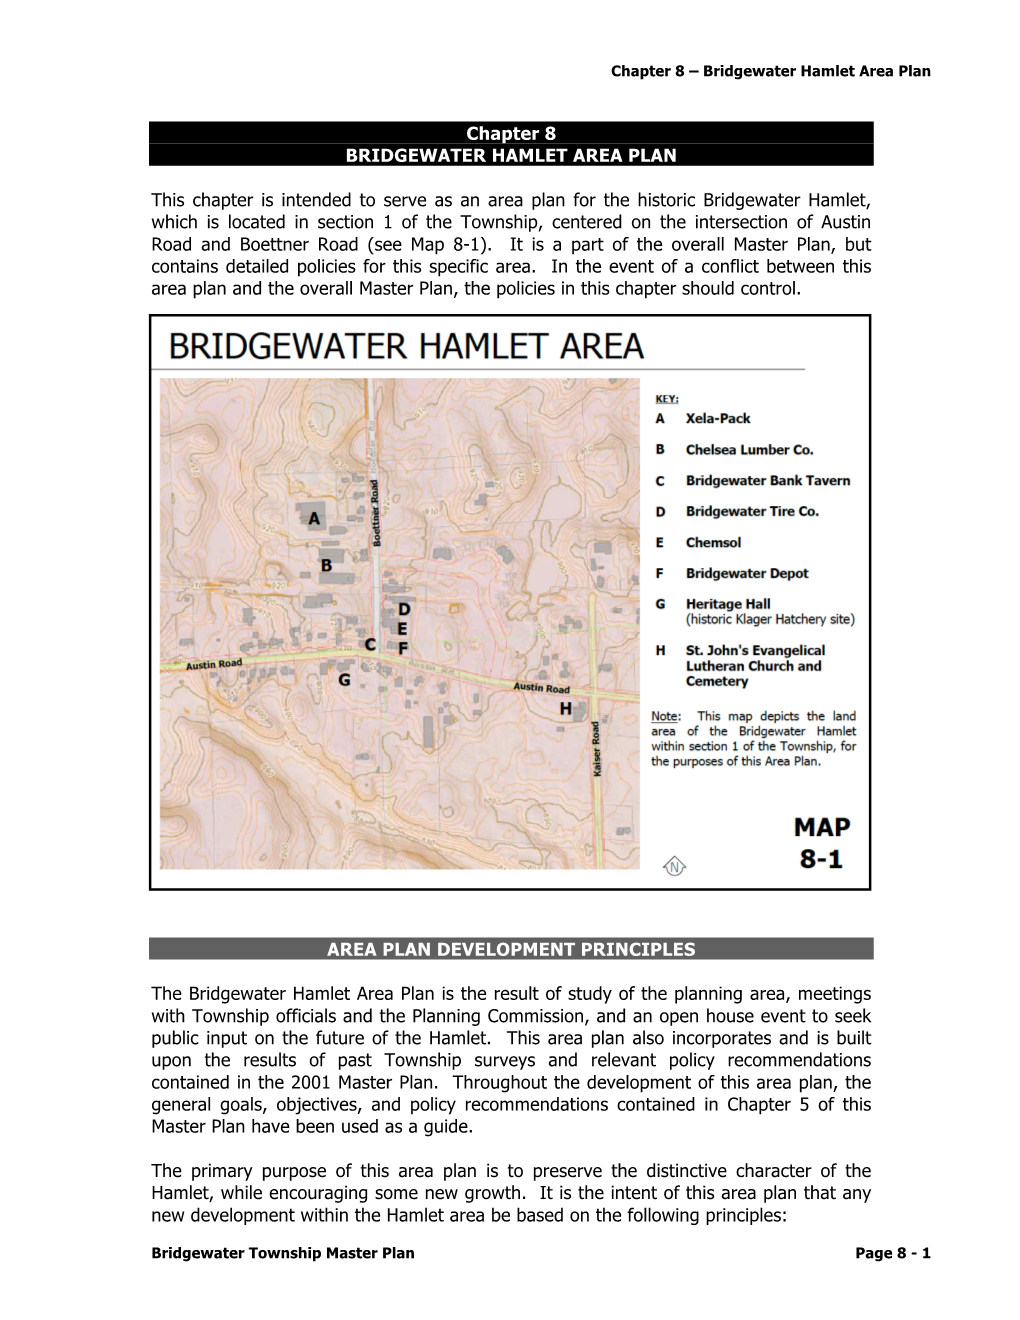 Bridgewater Hamlet Area Plan